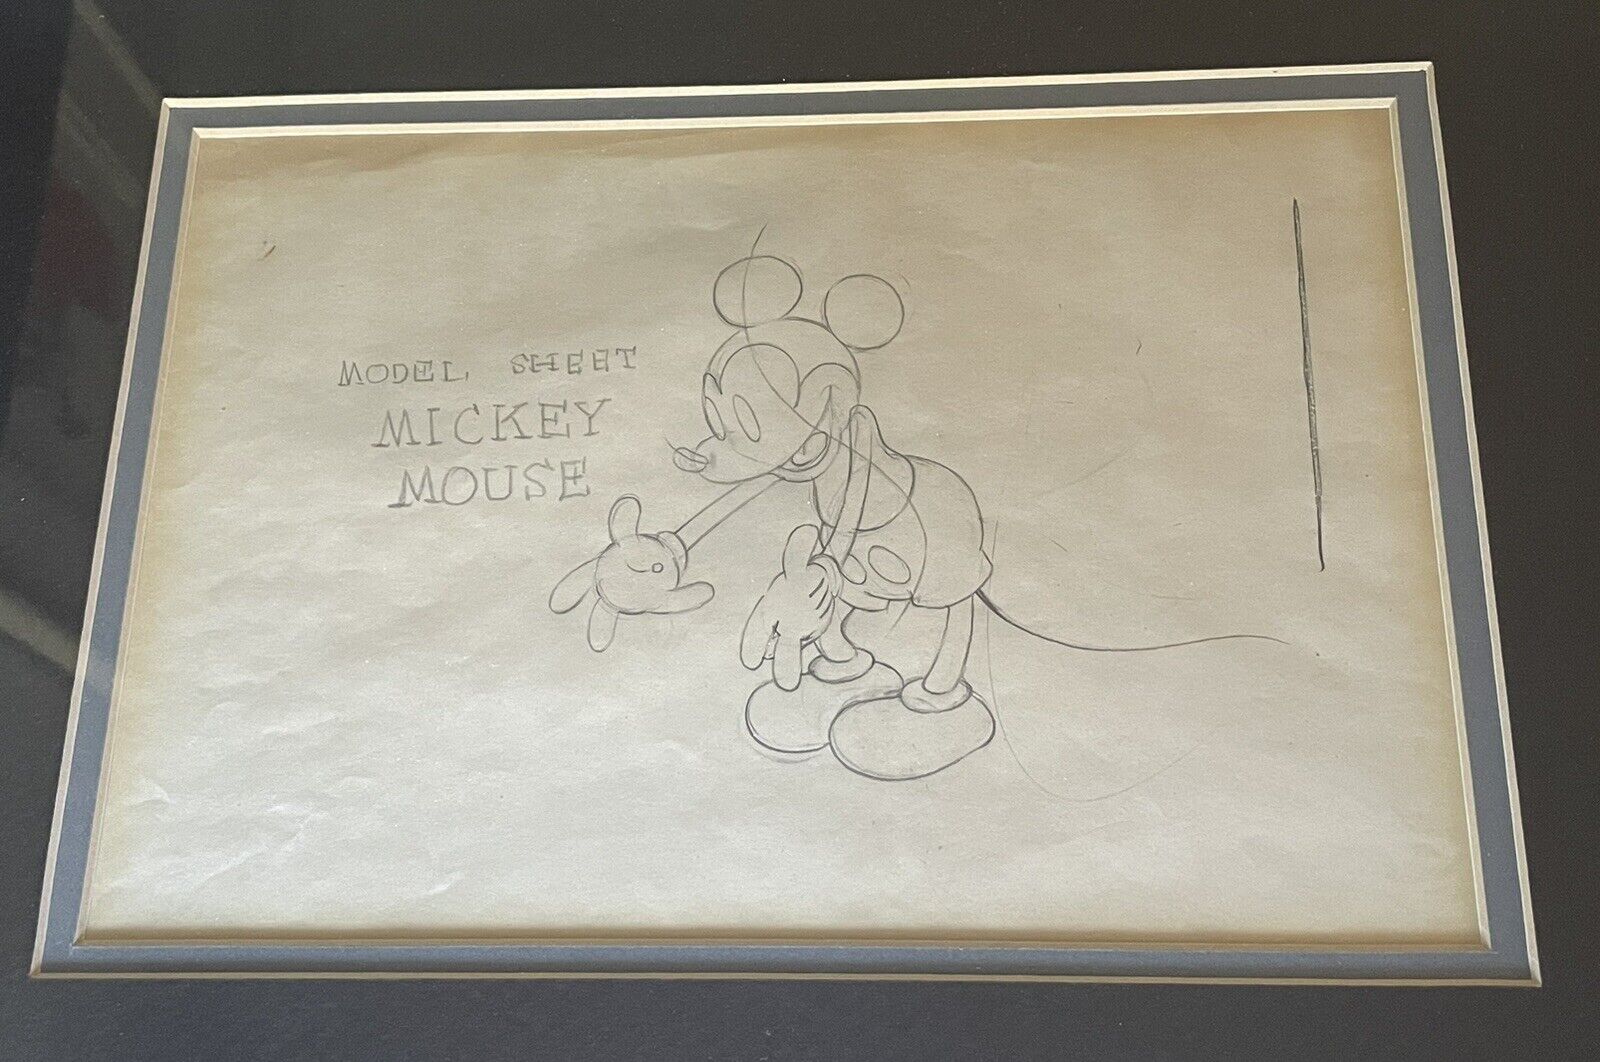 Walt Disney Company Original Drawing Used as a Character Study Model Sheet 1930s